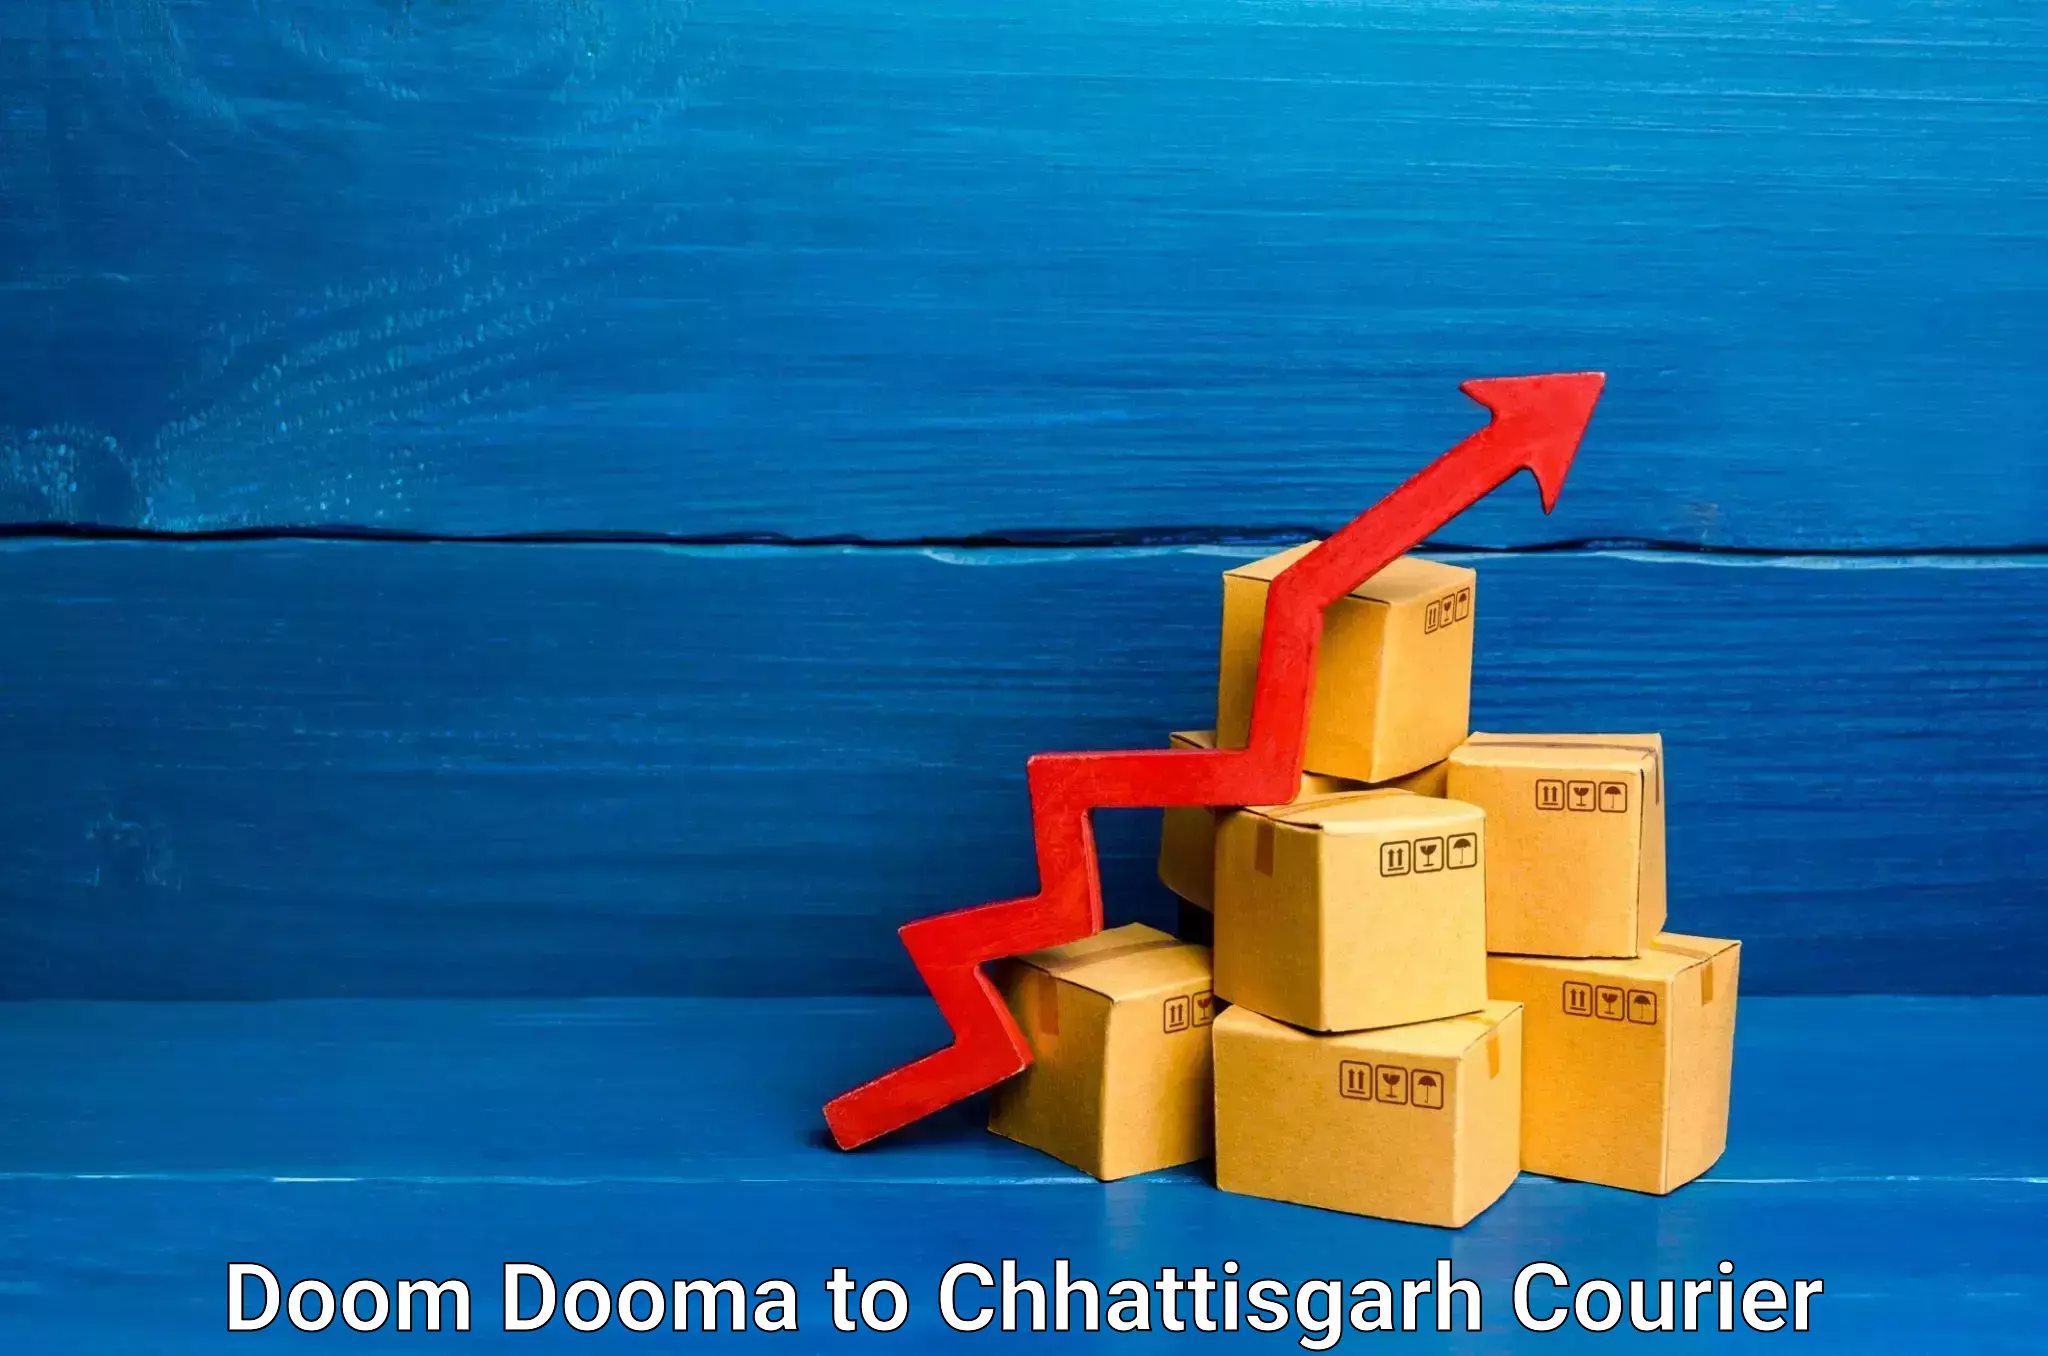 Express delivery capabilities Doom Dooma to Jaijaipur